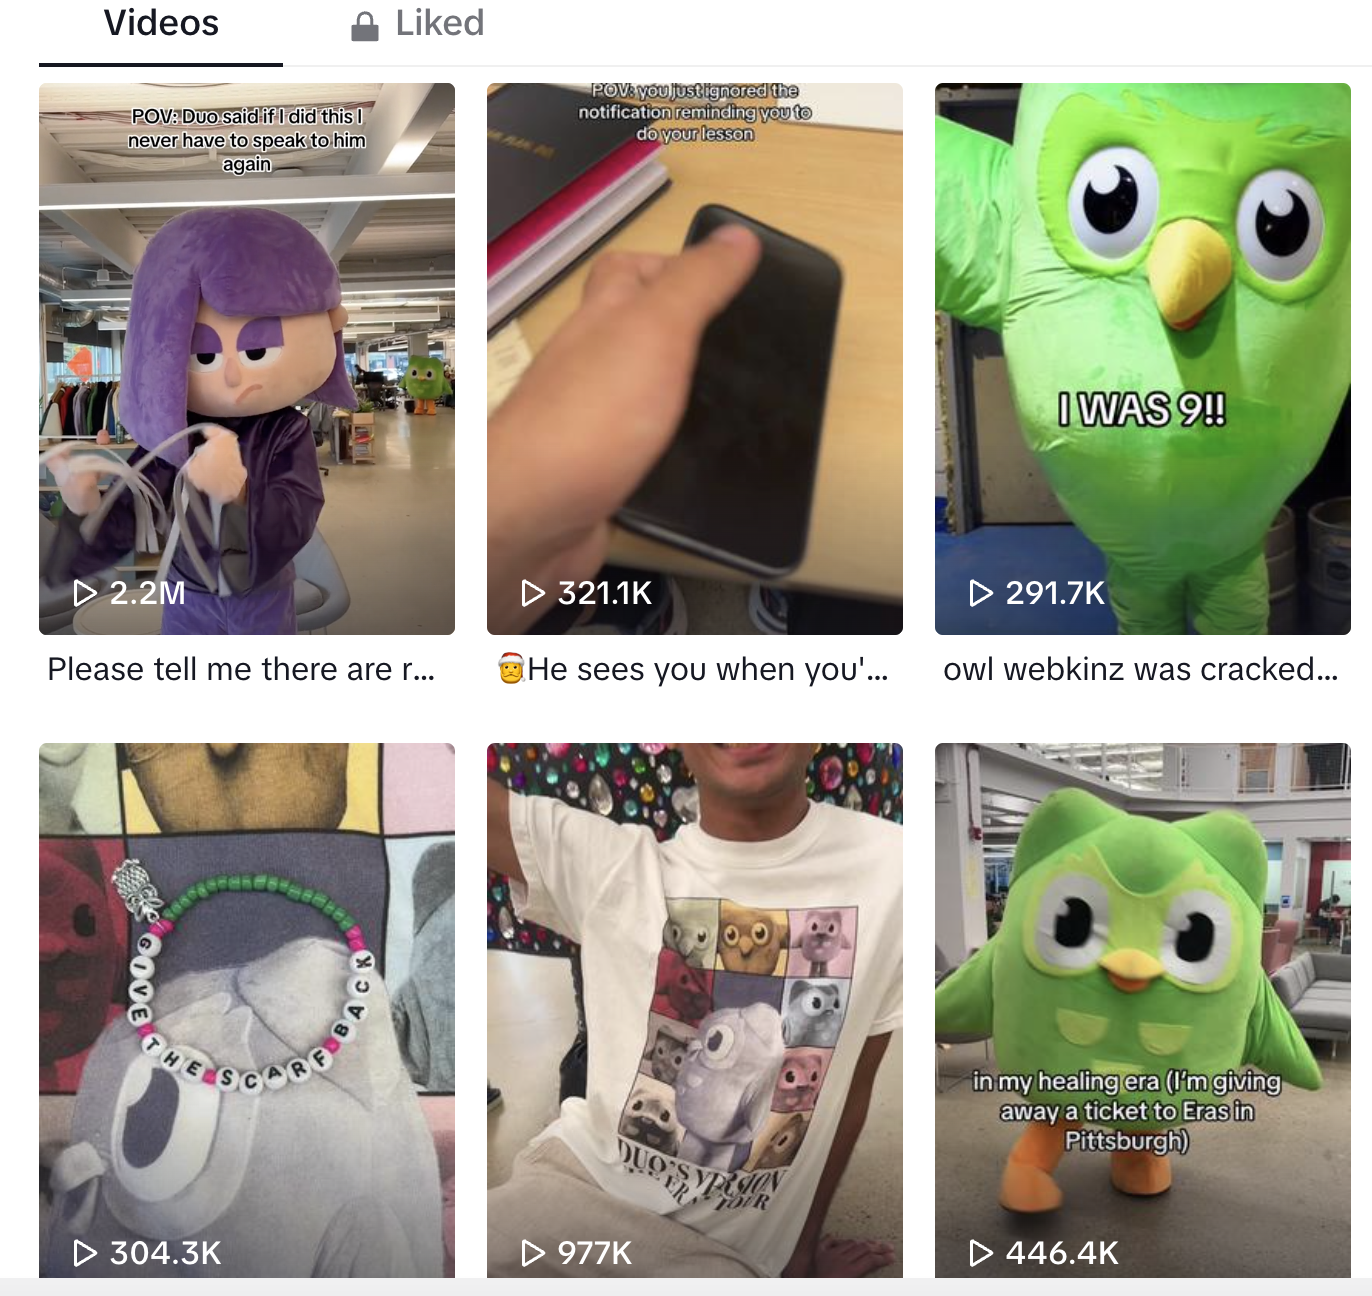 examples of popular videos on the DuoLingo TikTok account